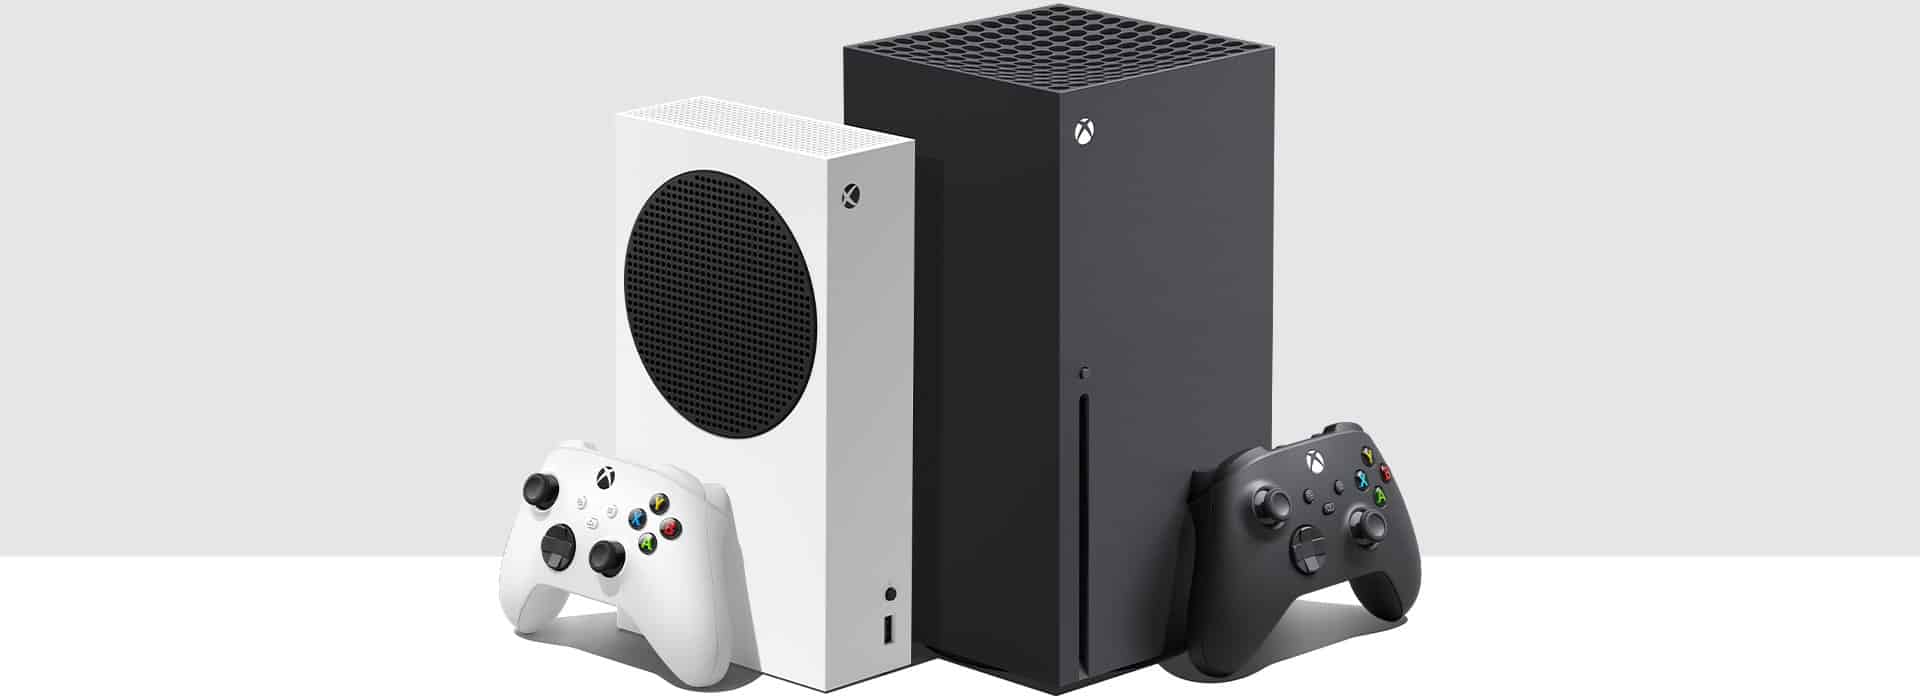 Mantel Ontwaken Dicht List Of Xbox Console Generations In Order - Videogamer